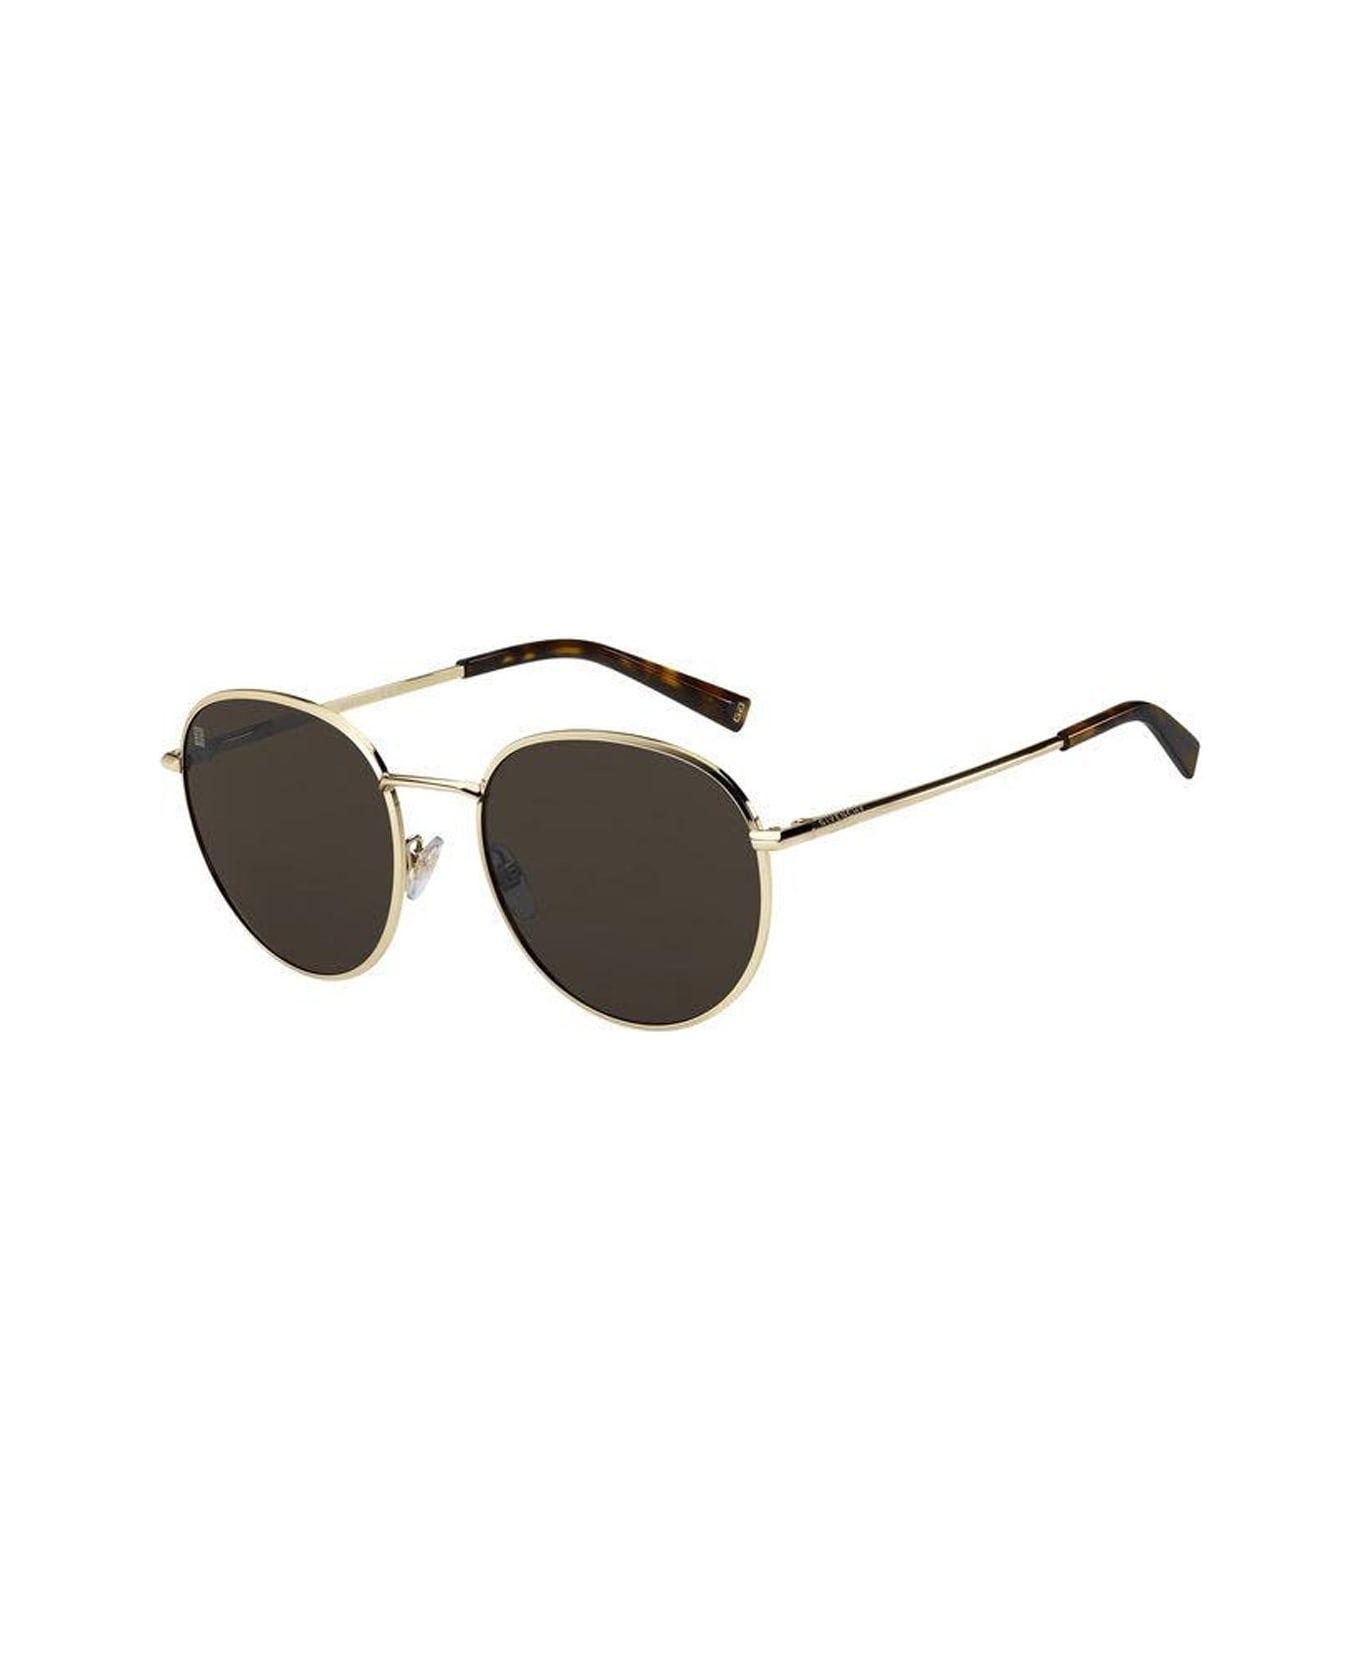 Givenchy Eyewear Gv 7192/s Sunglasses - Oro サングラス